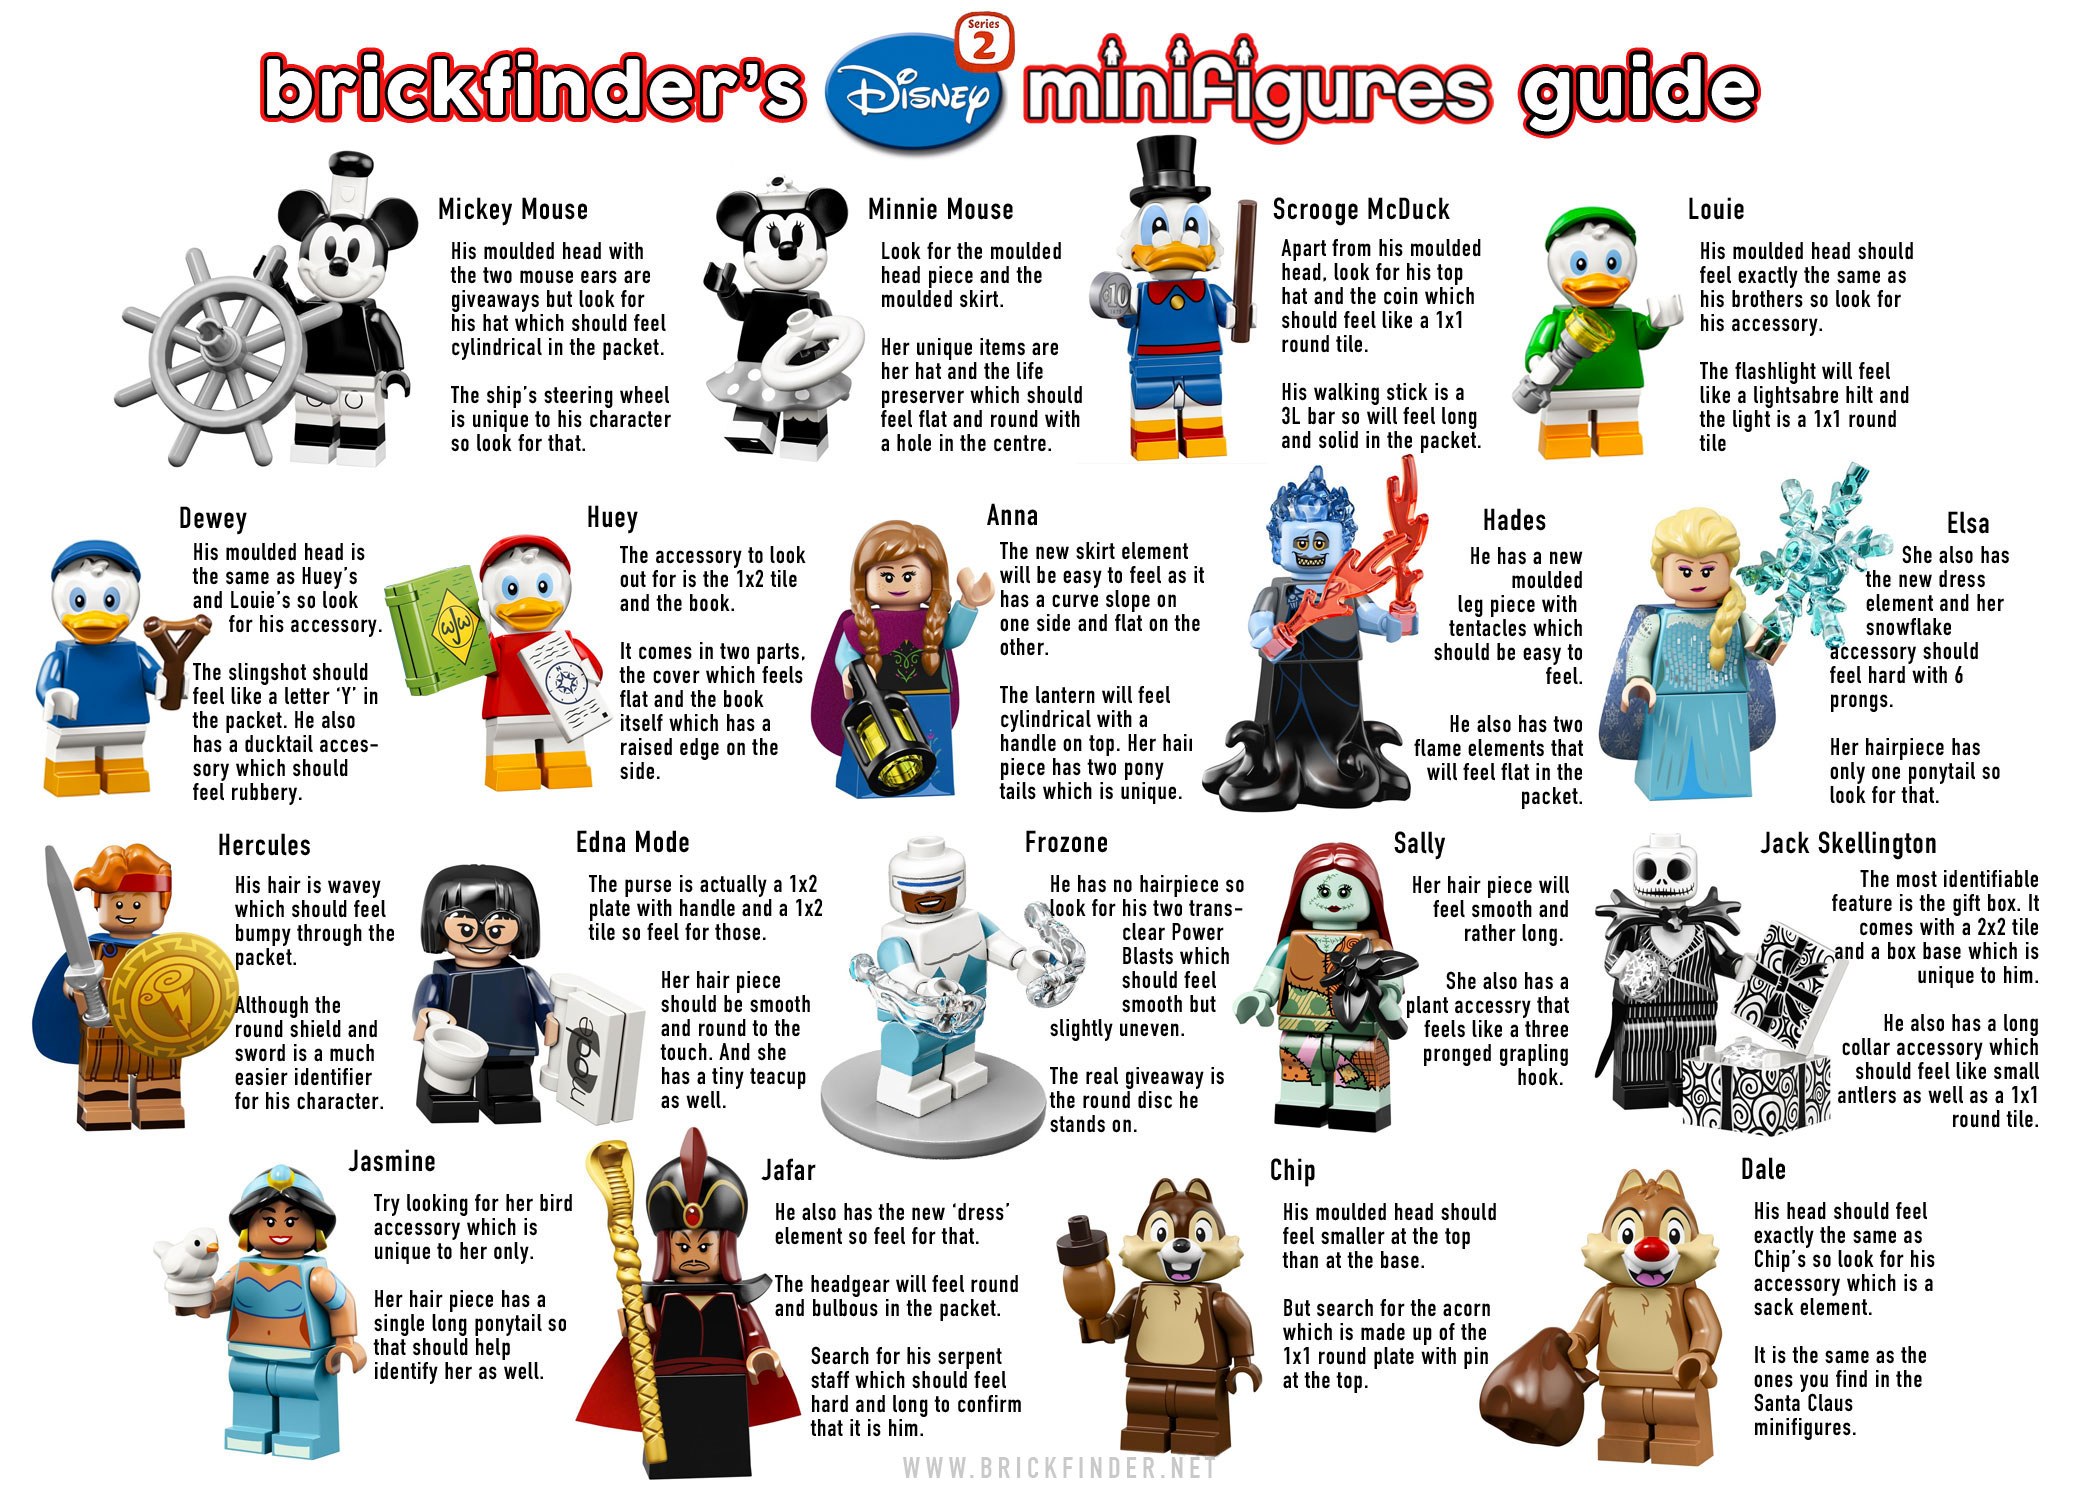 Brickfinder - Disney Series 2 Minifigures Guide!